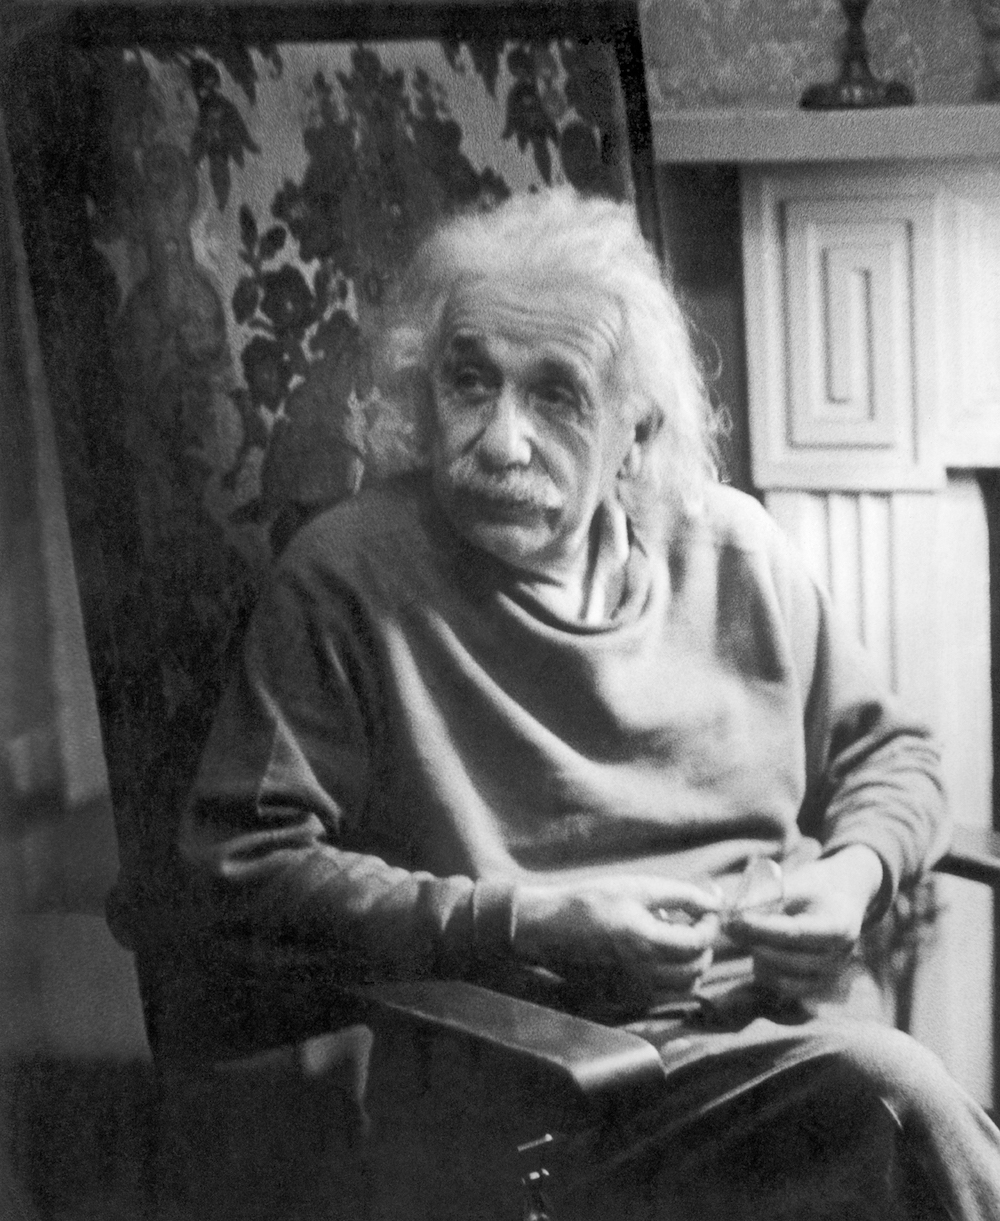 Albert Einstein, photographed in 1948 by Marilyn Stafford